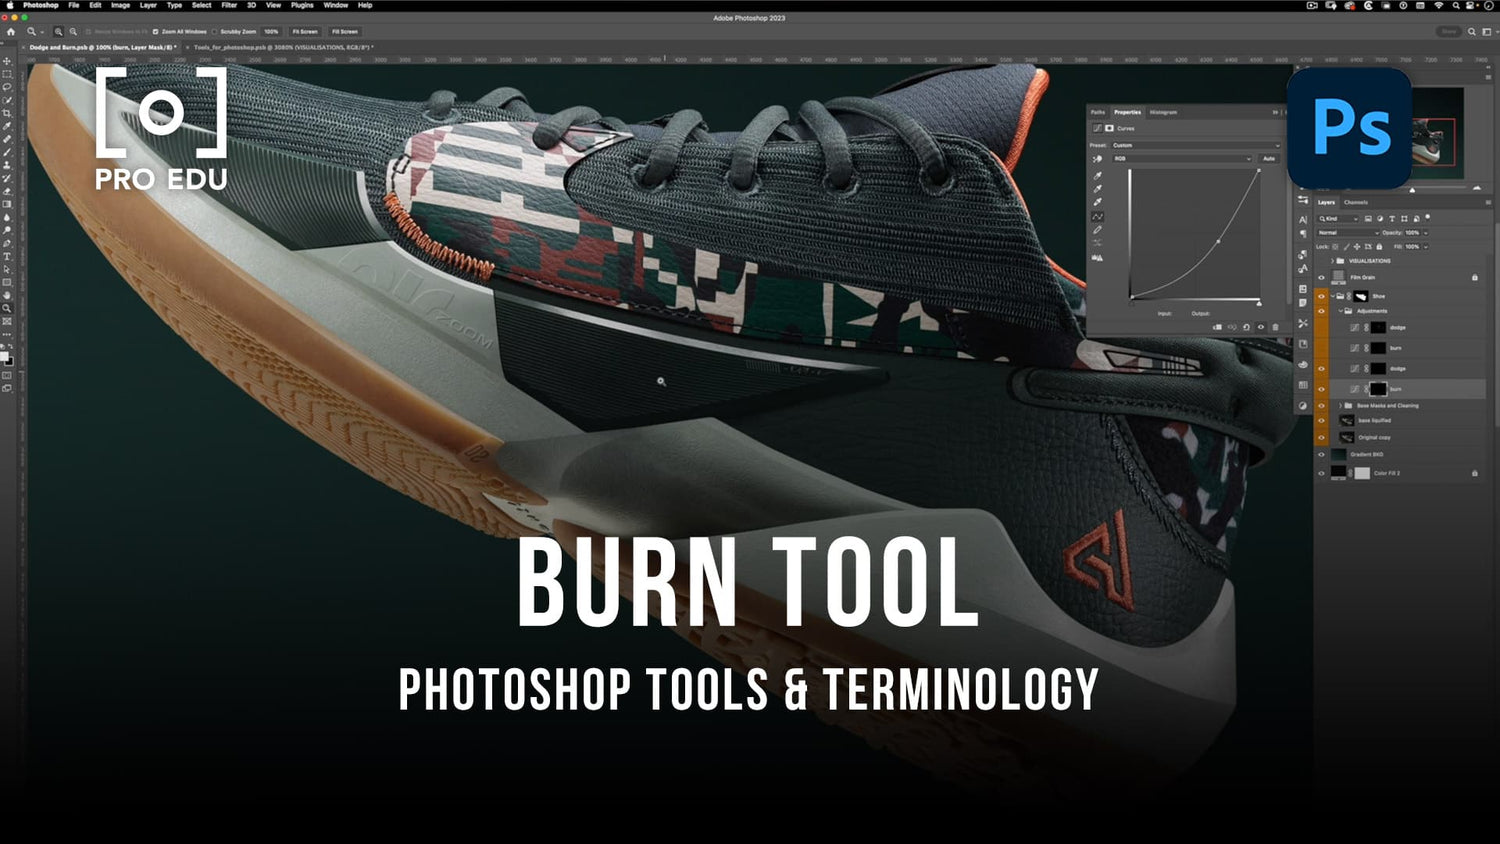 Using the Burn Tool in Photoshop - PRO EDU Tutorial